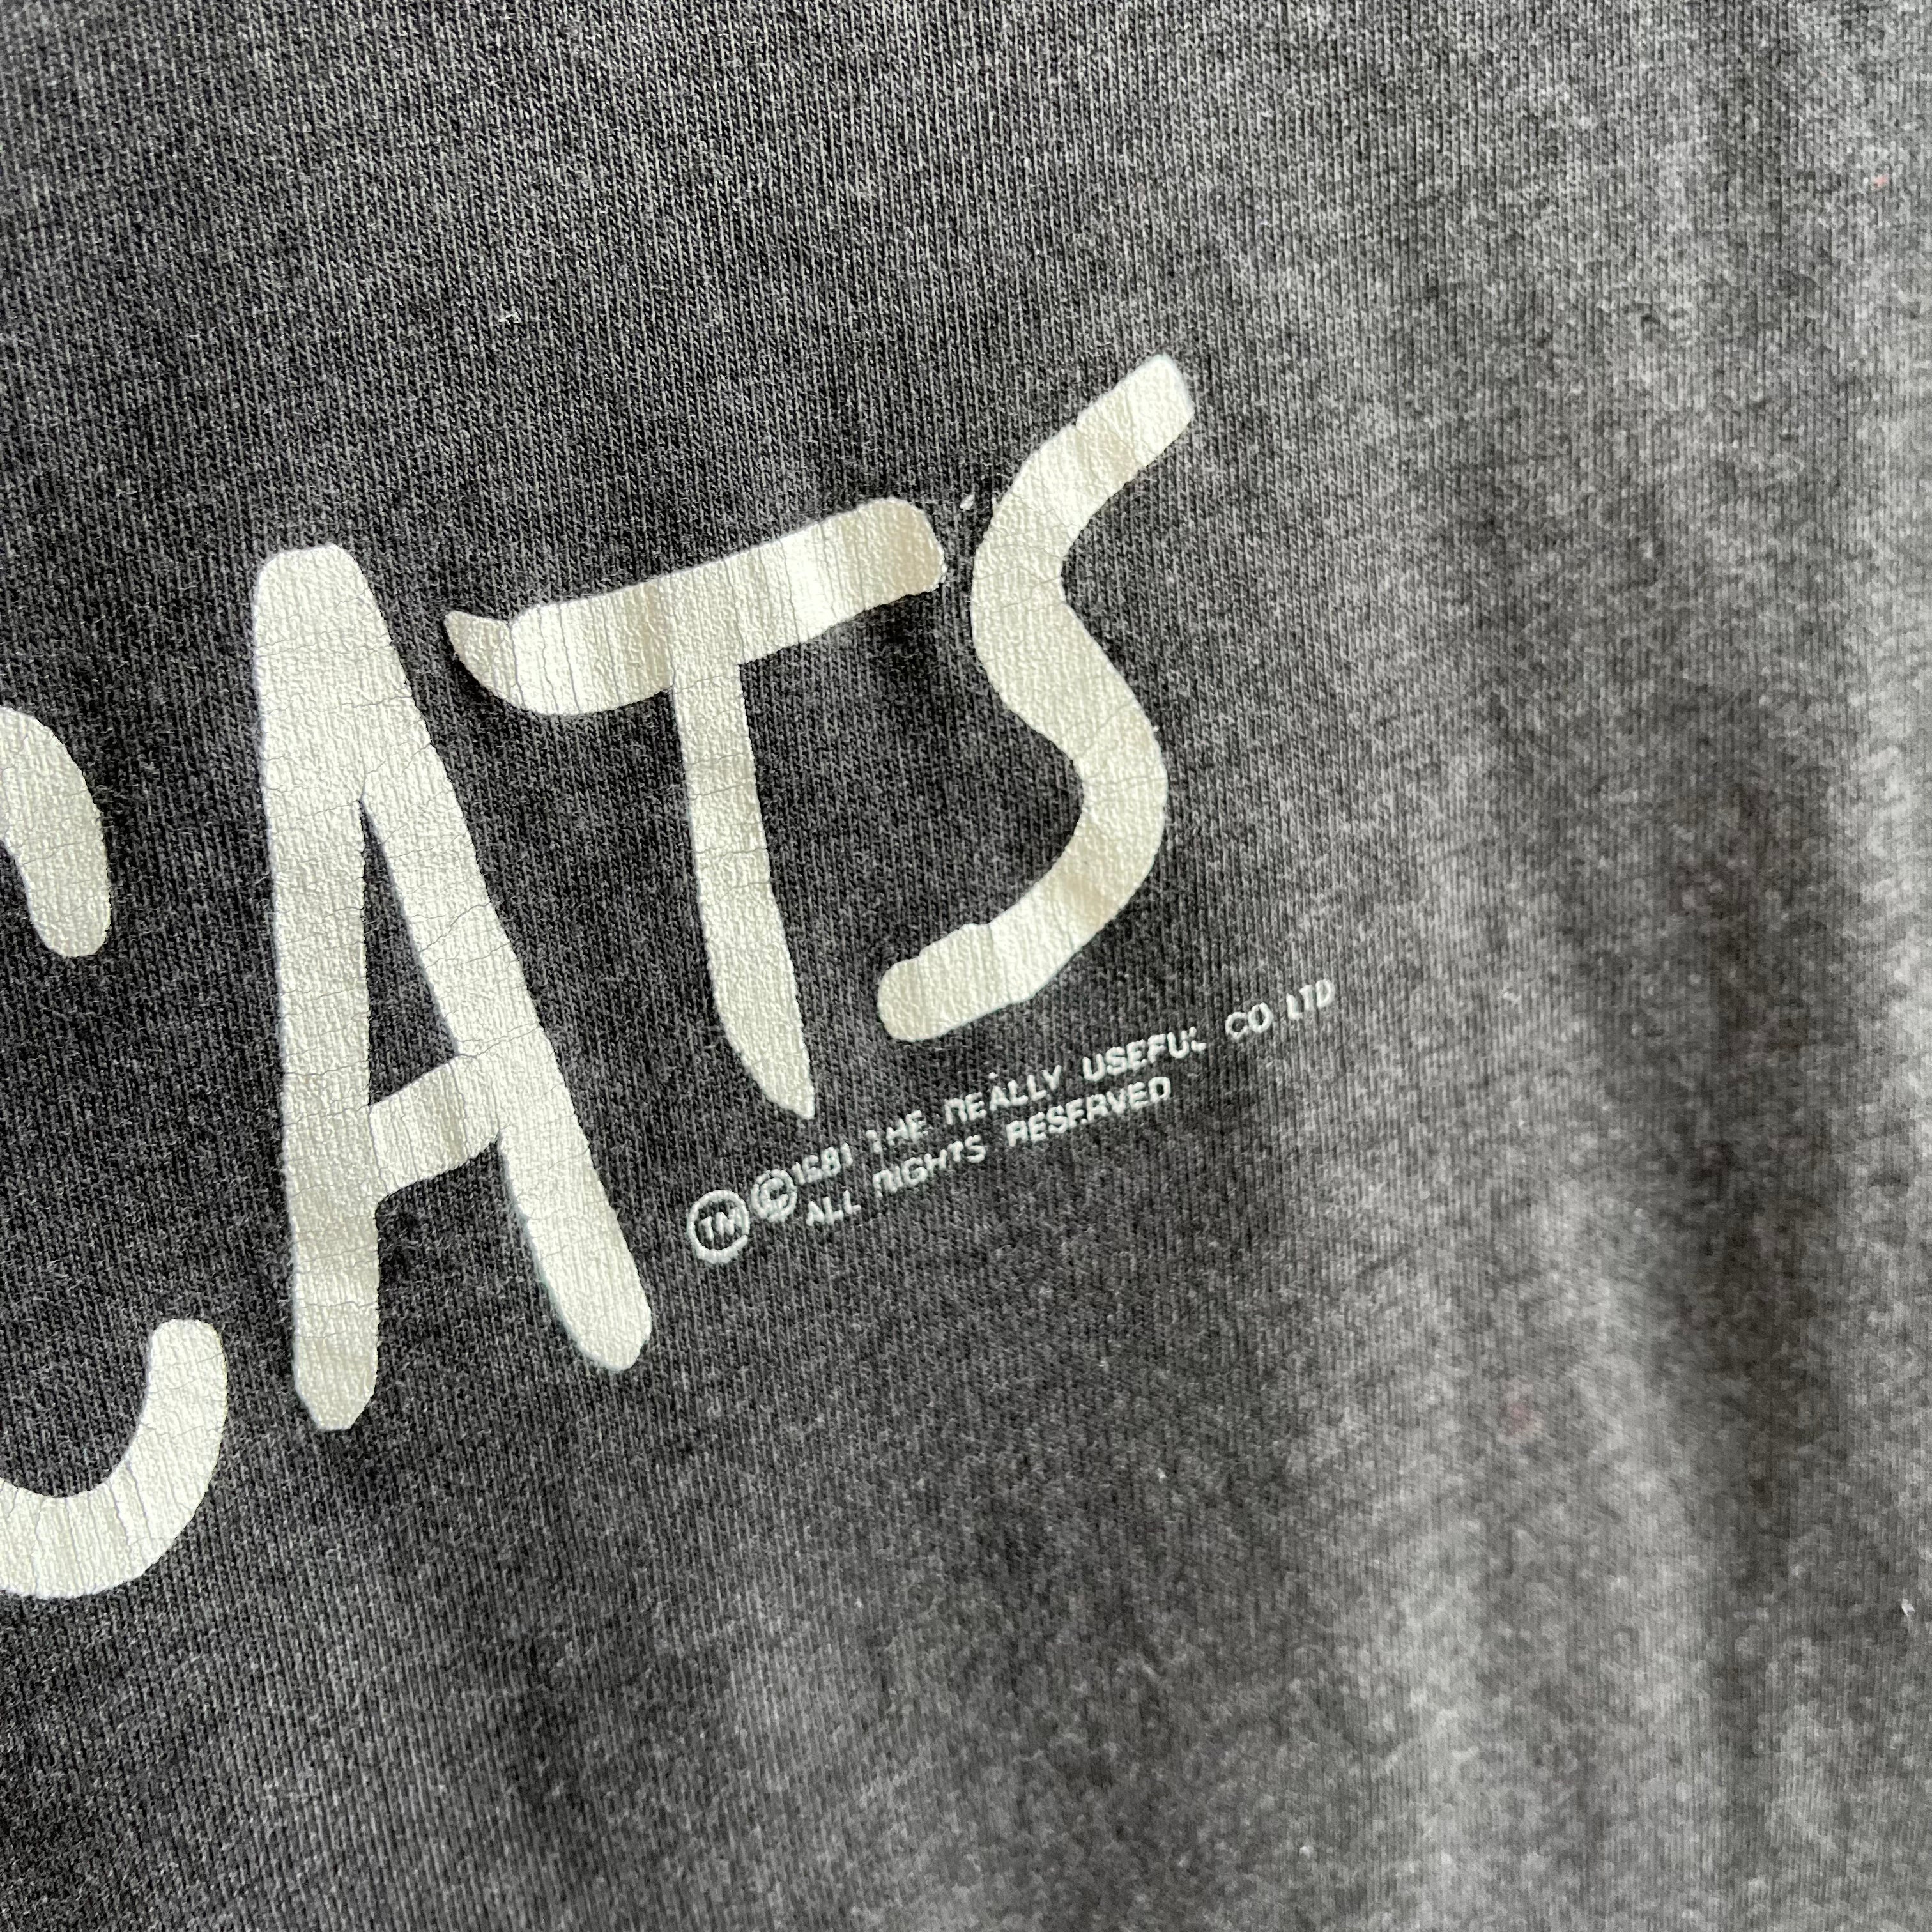 1981 Cats - The Musical - T-Shirt